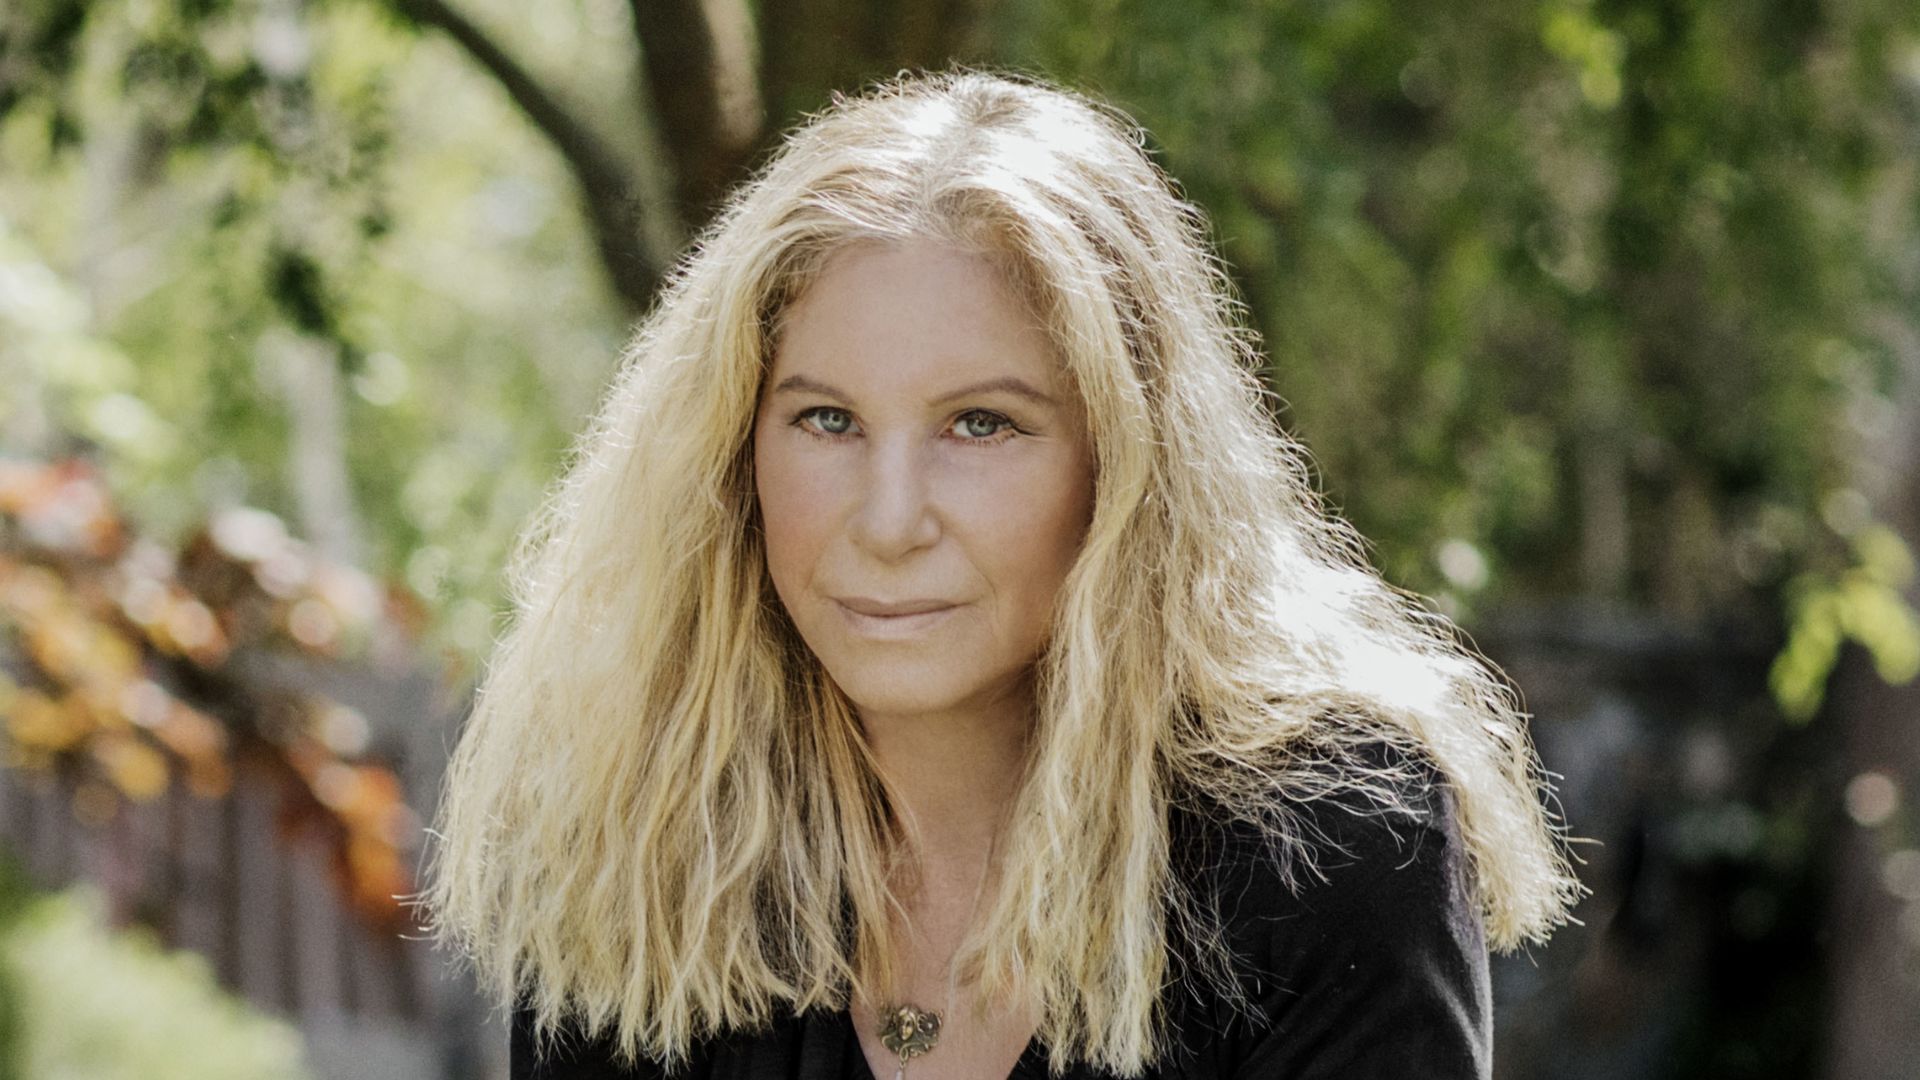 Barbra Streisand With Blonde Hair